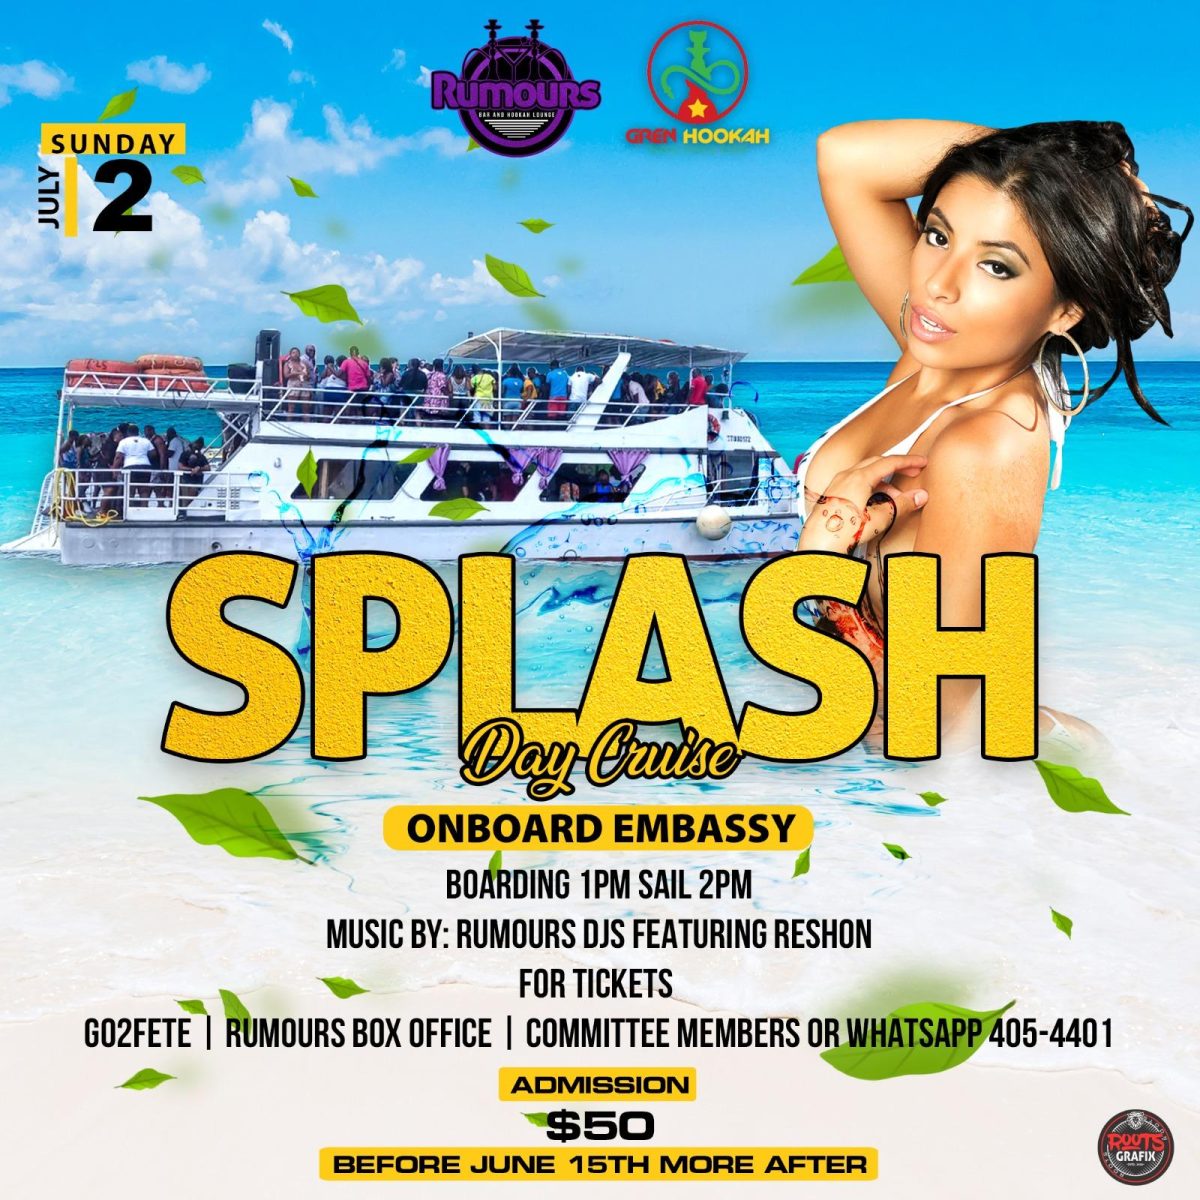 Splash day Cruise - Onboard Embassy